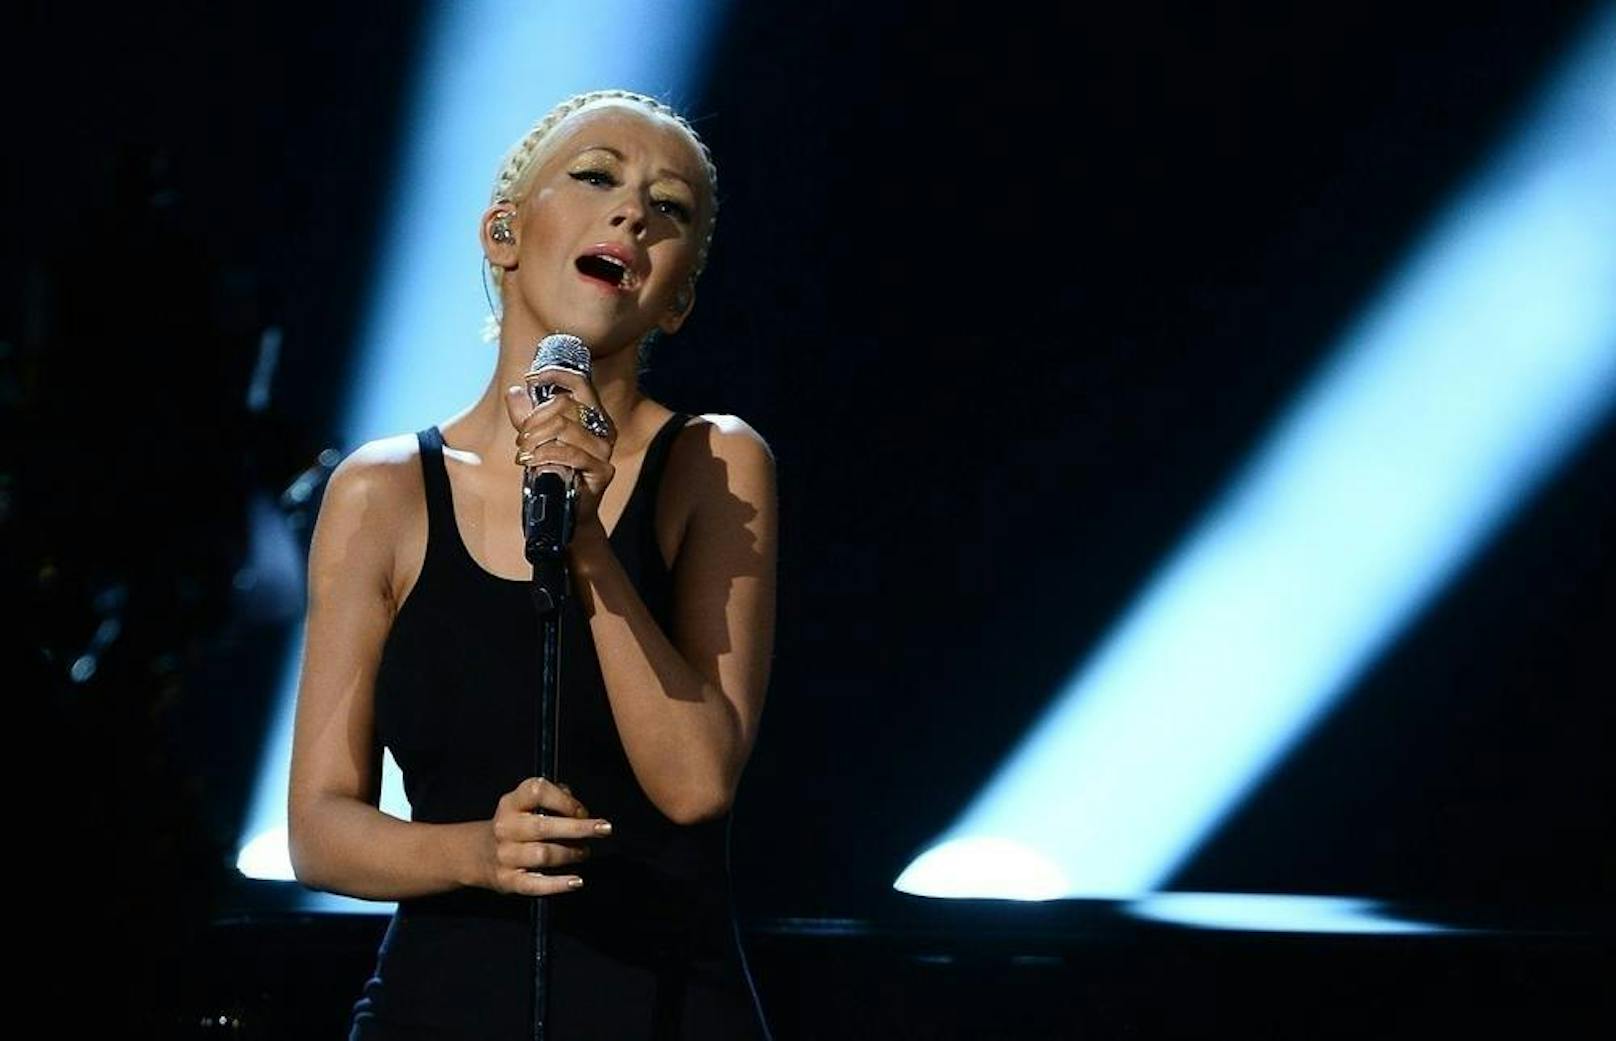 24.11.2013
Singer Christina performt bei  American Music Awards in LA